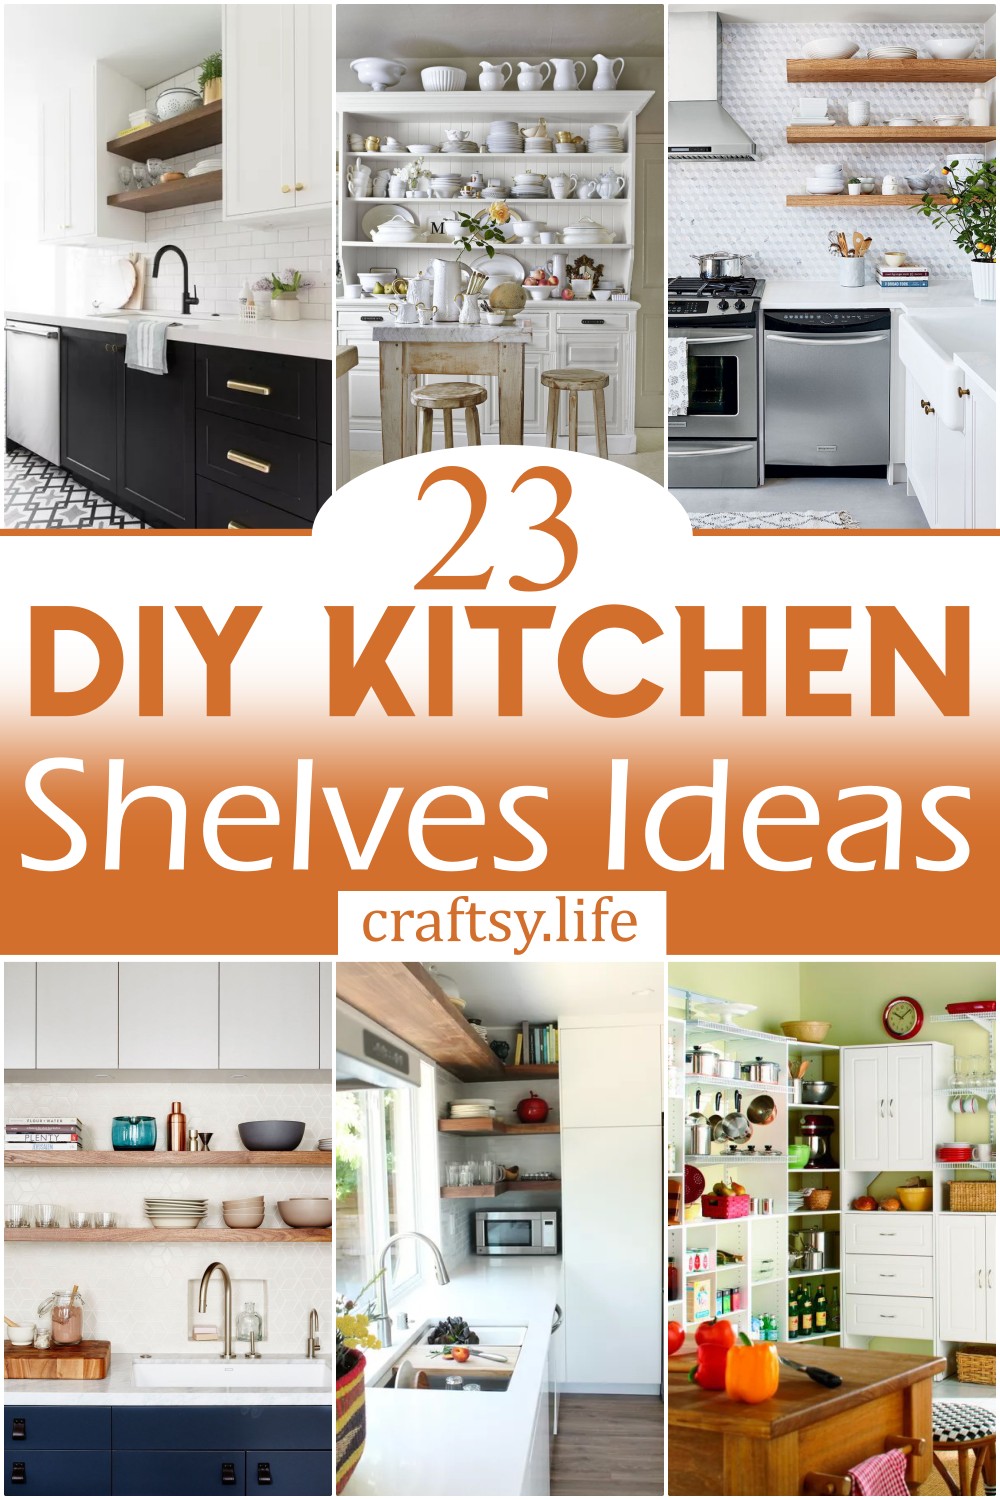 23 DIY Kitchen Shelves Ideas For Storage - Craftsy